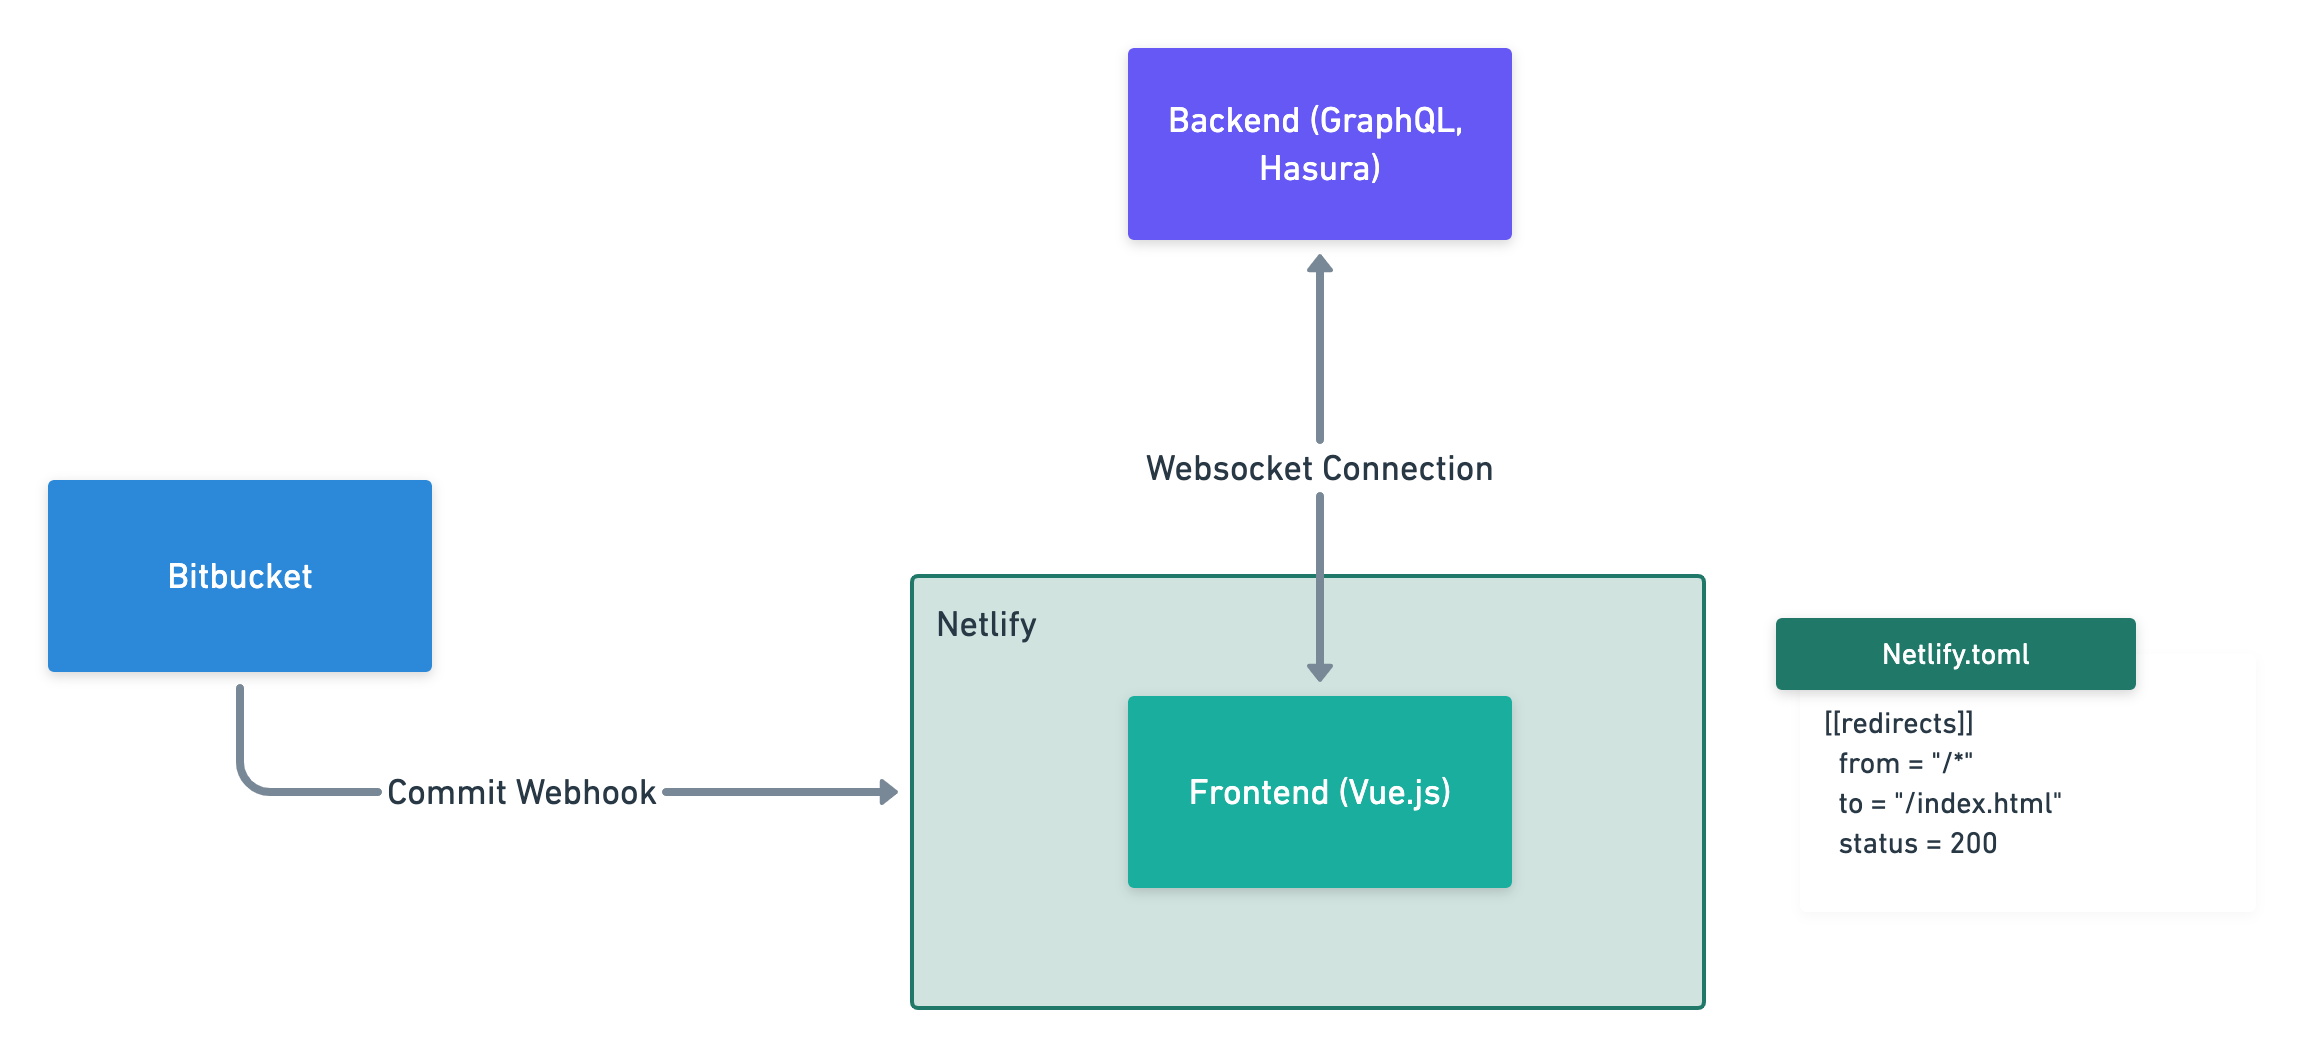 Fieldfusion architecture with Bitbucket, GraphQL, Hasura, Vue and Netlify